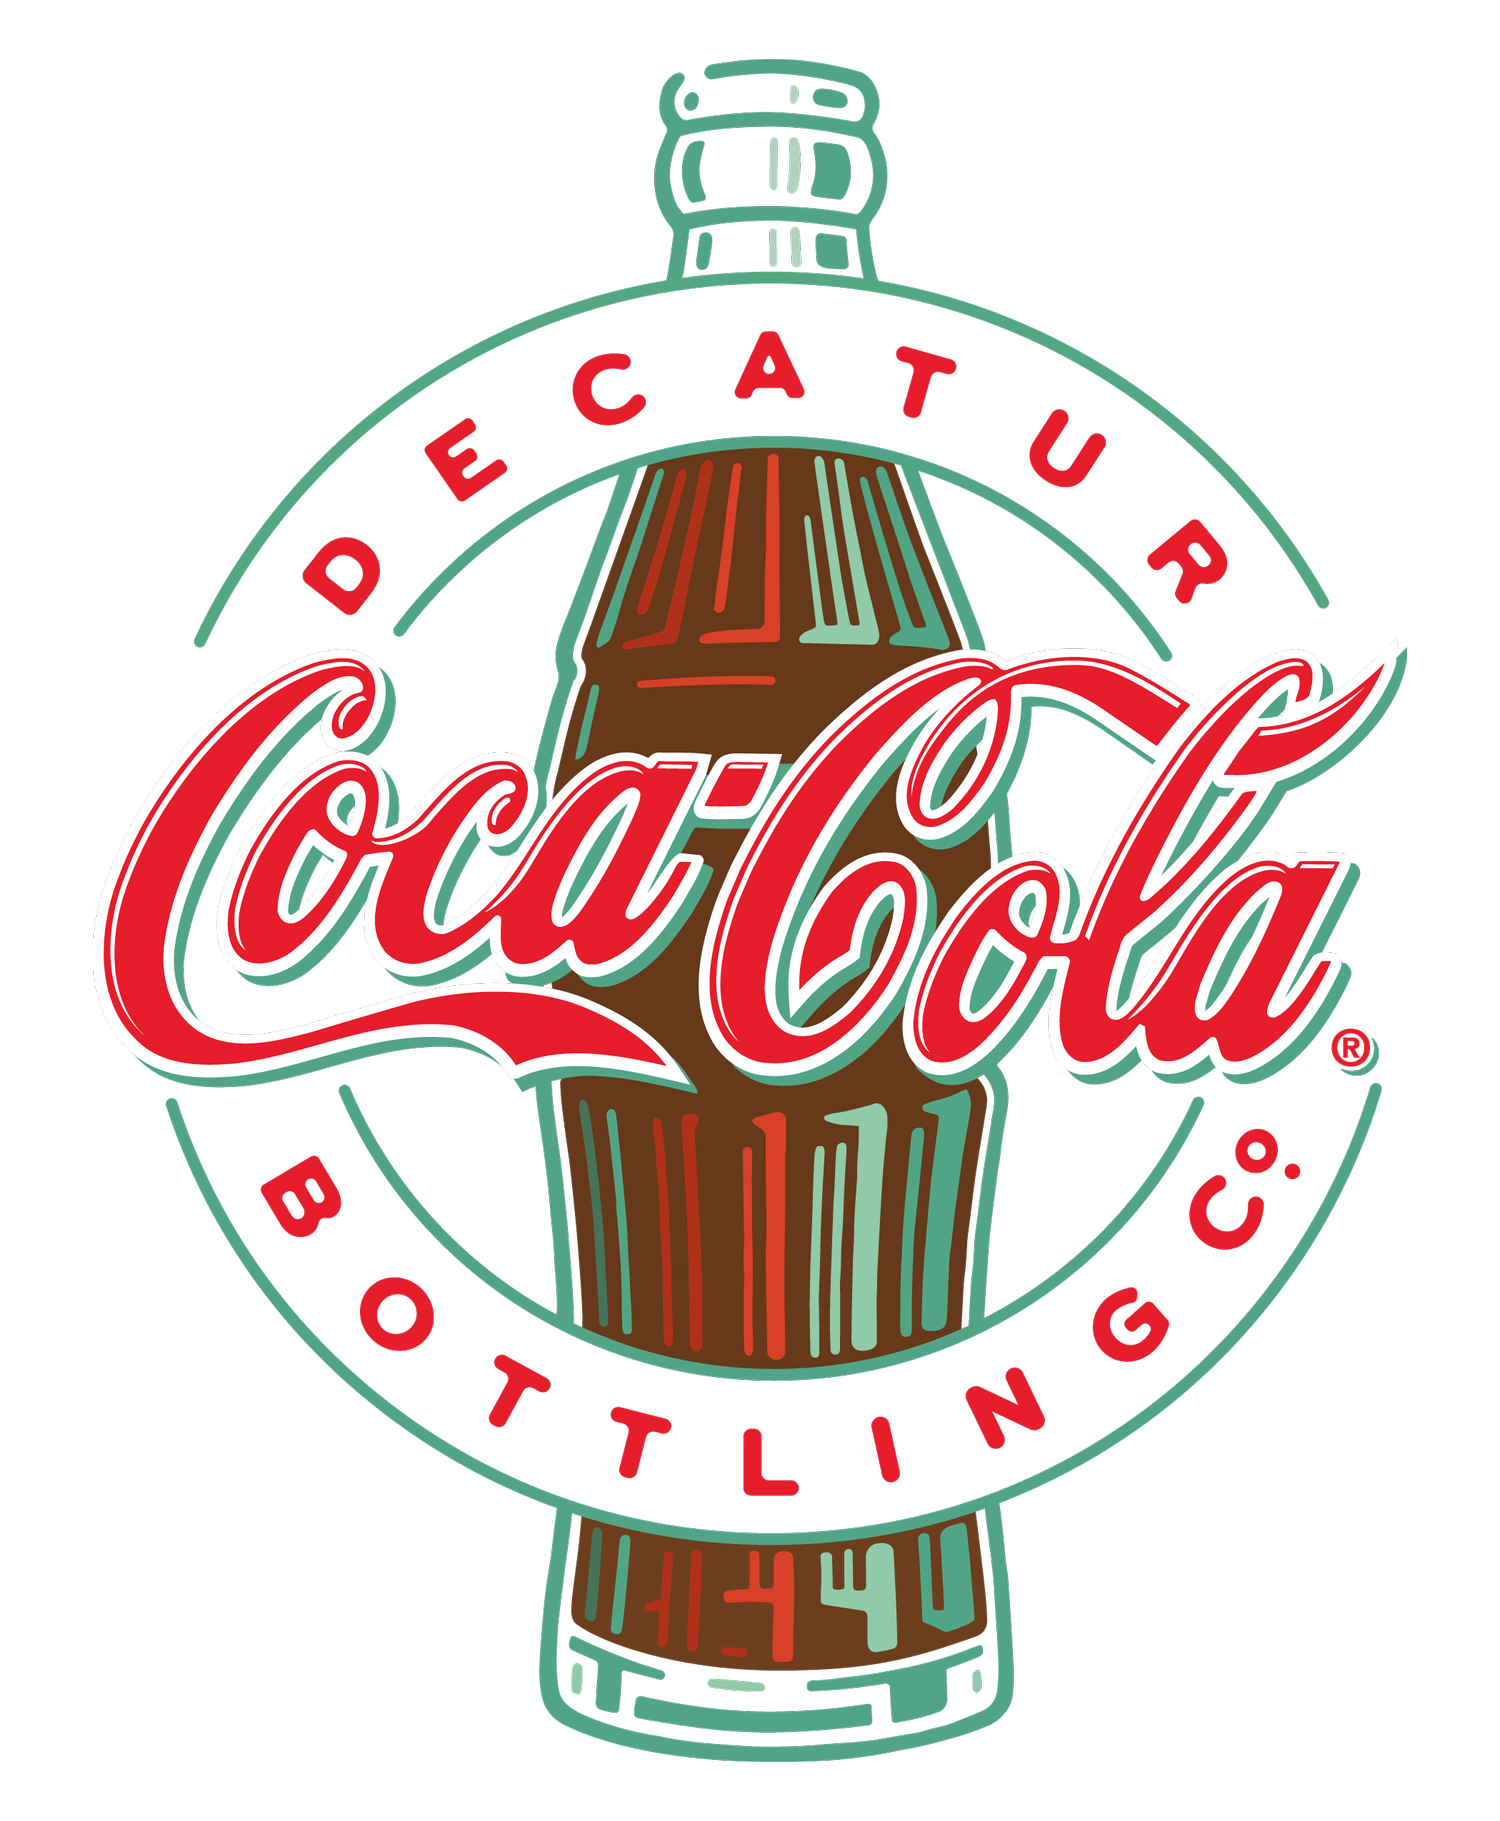 Decatur Coca-Cola Bottling Co